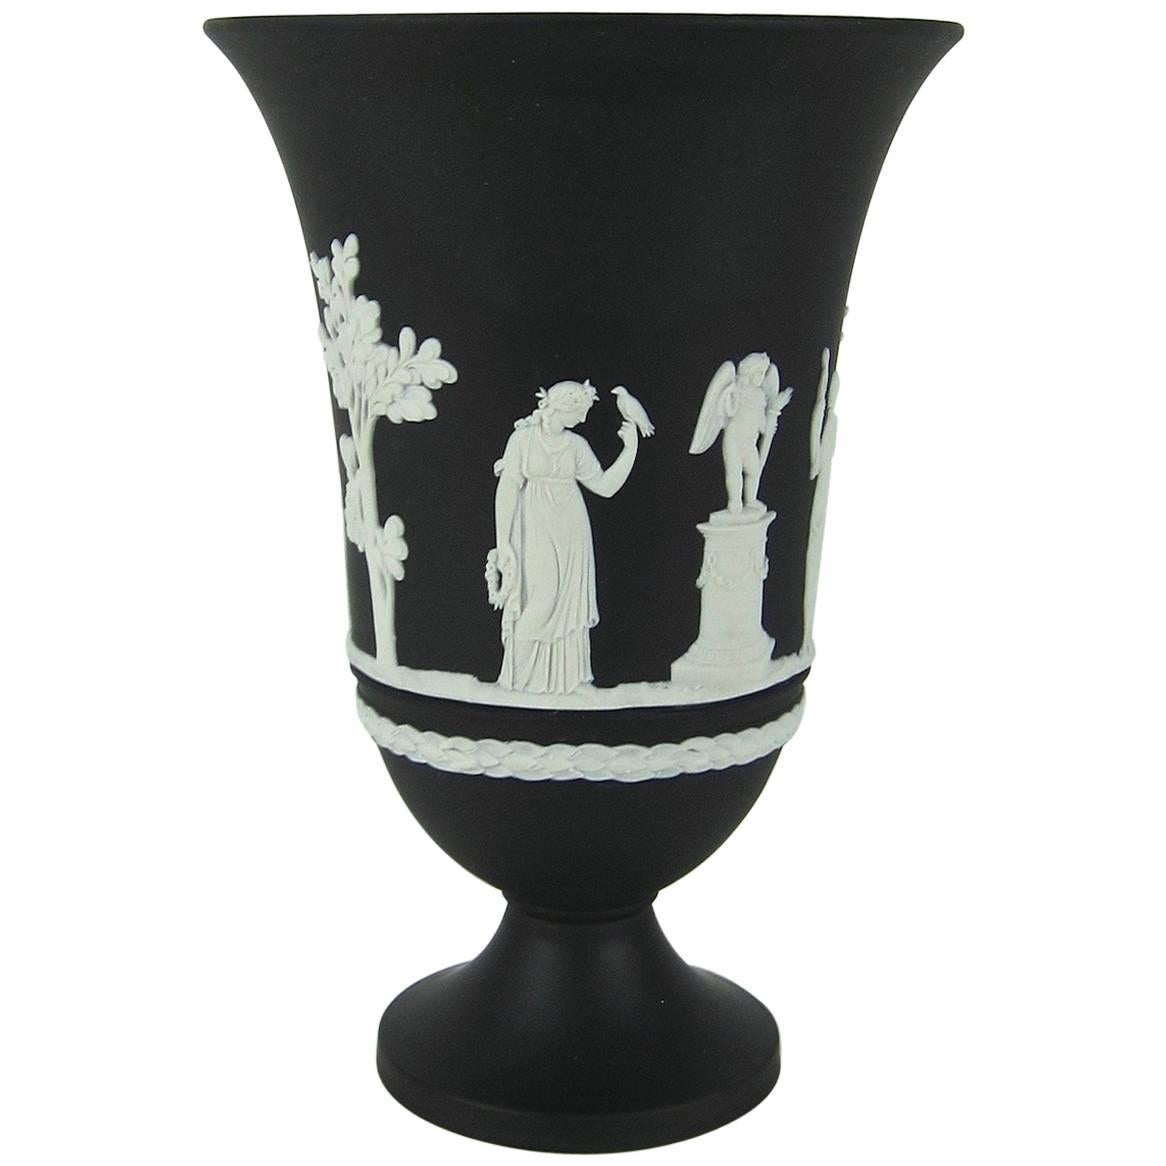 Wedgwood Black Jasper Ware Neoclassical Vase with Sacrifice Figures